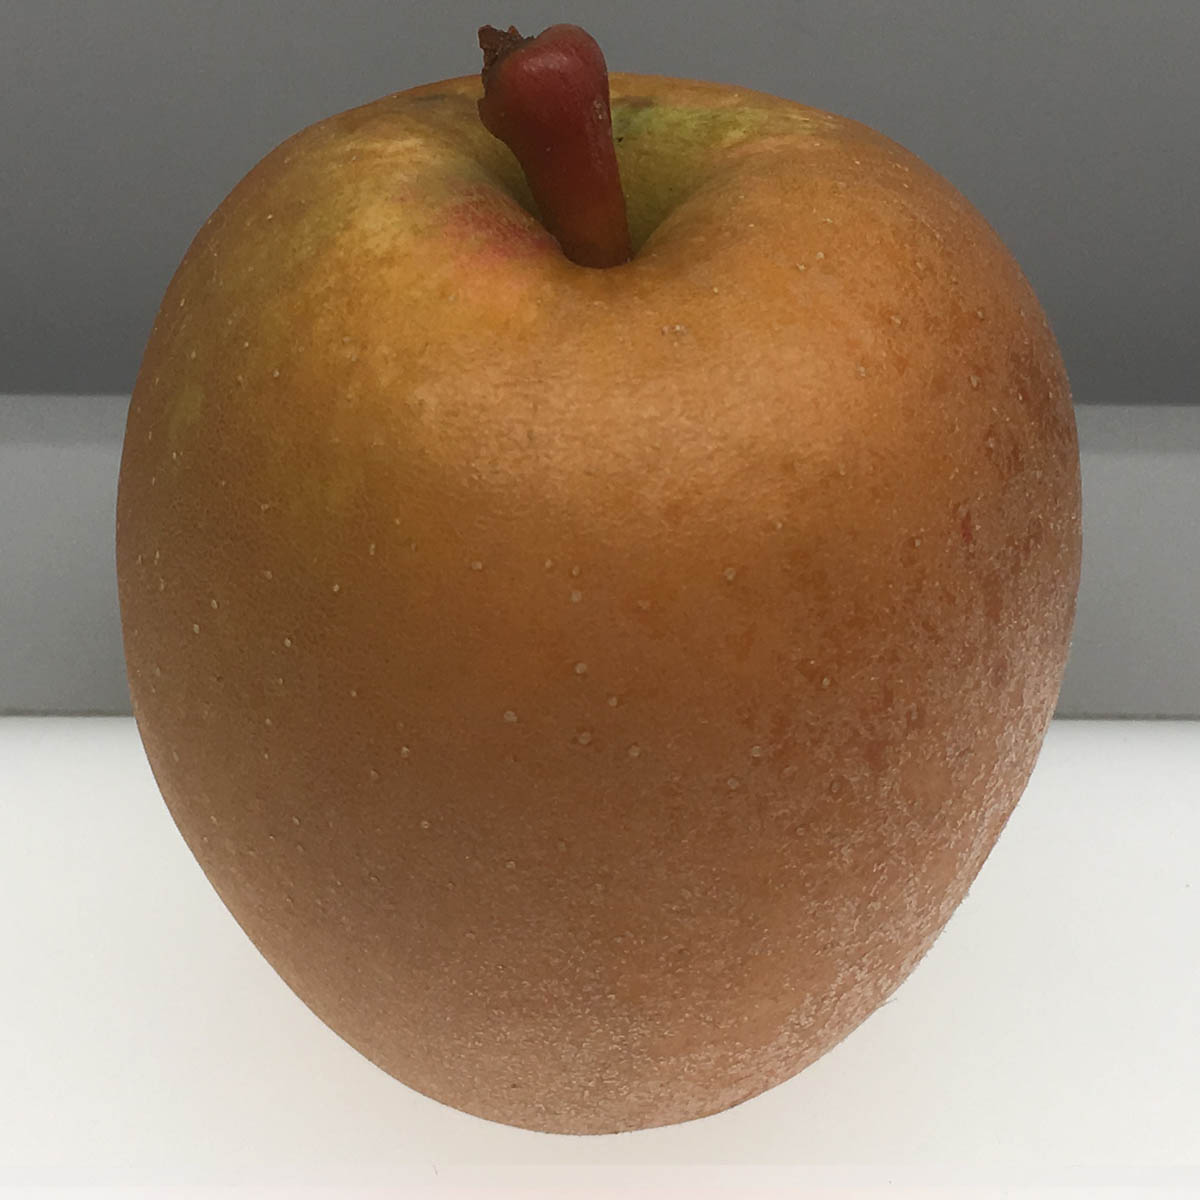 Hudson Golden Gem apple